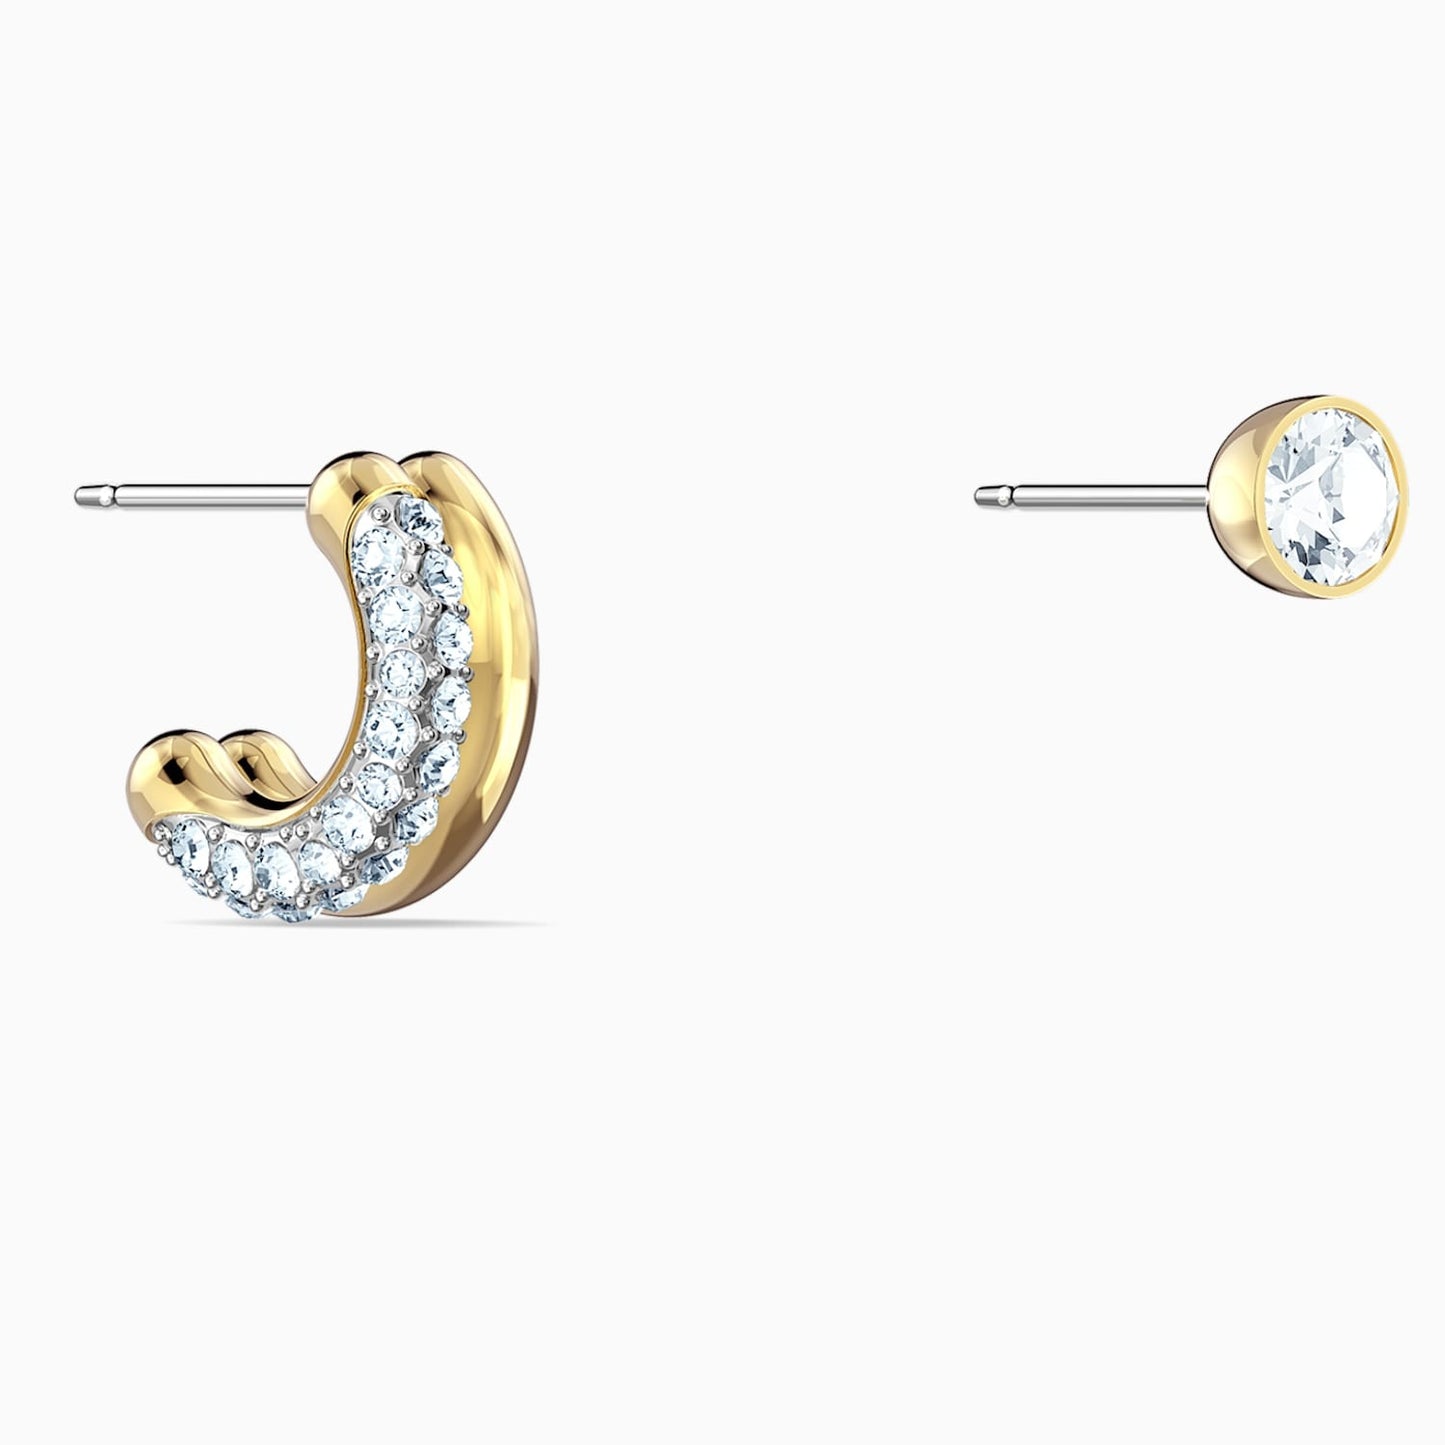 Swarovski Time Women's Earrings Mixed Plating 5566005